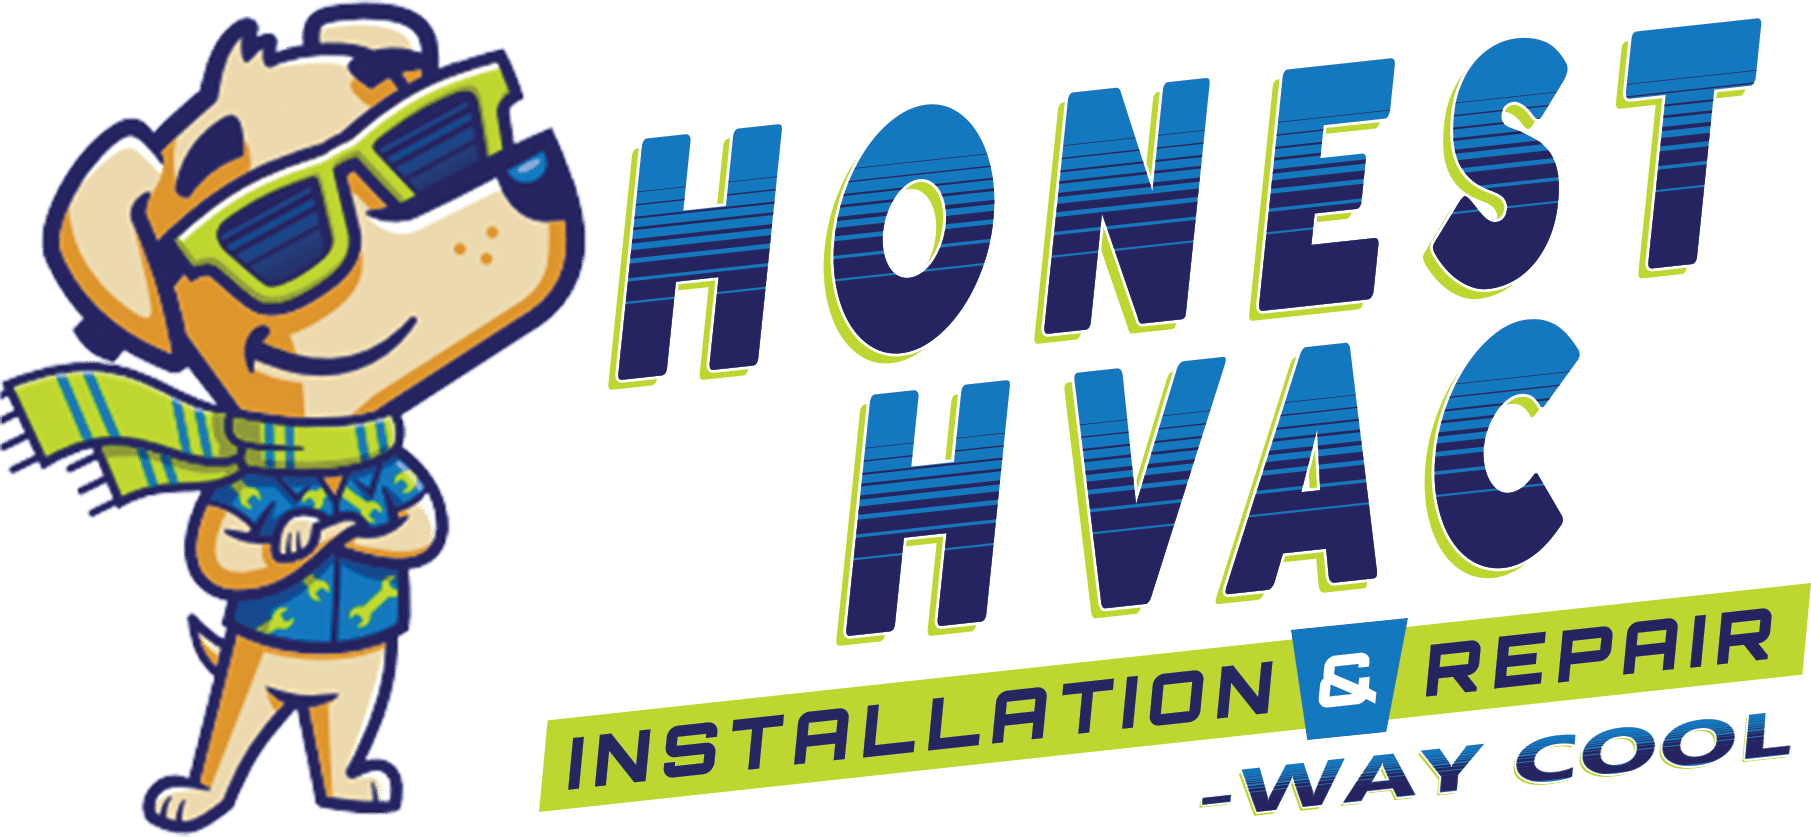 Honest-HVAC-7.png